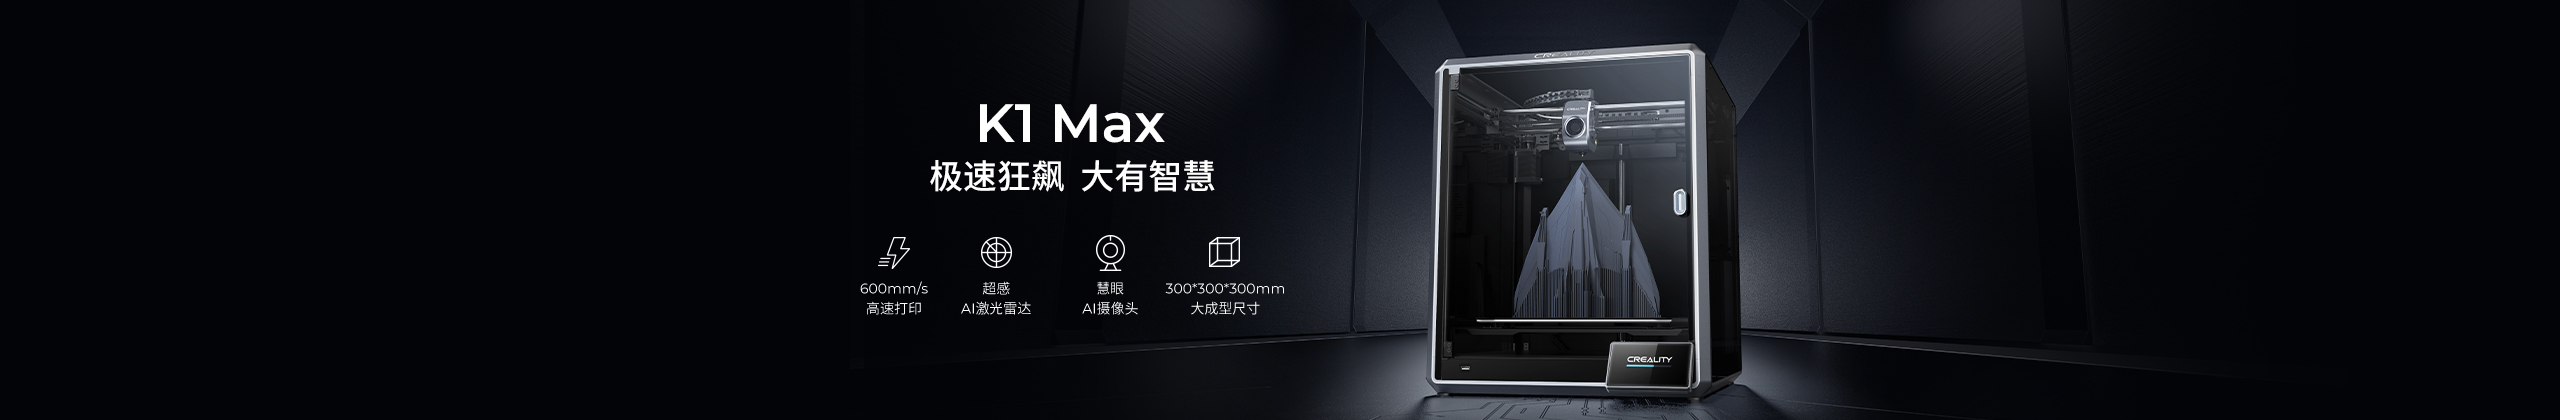 K1 Max新机推广